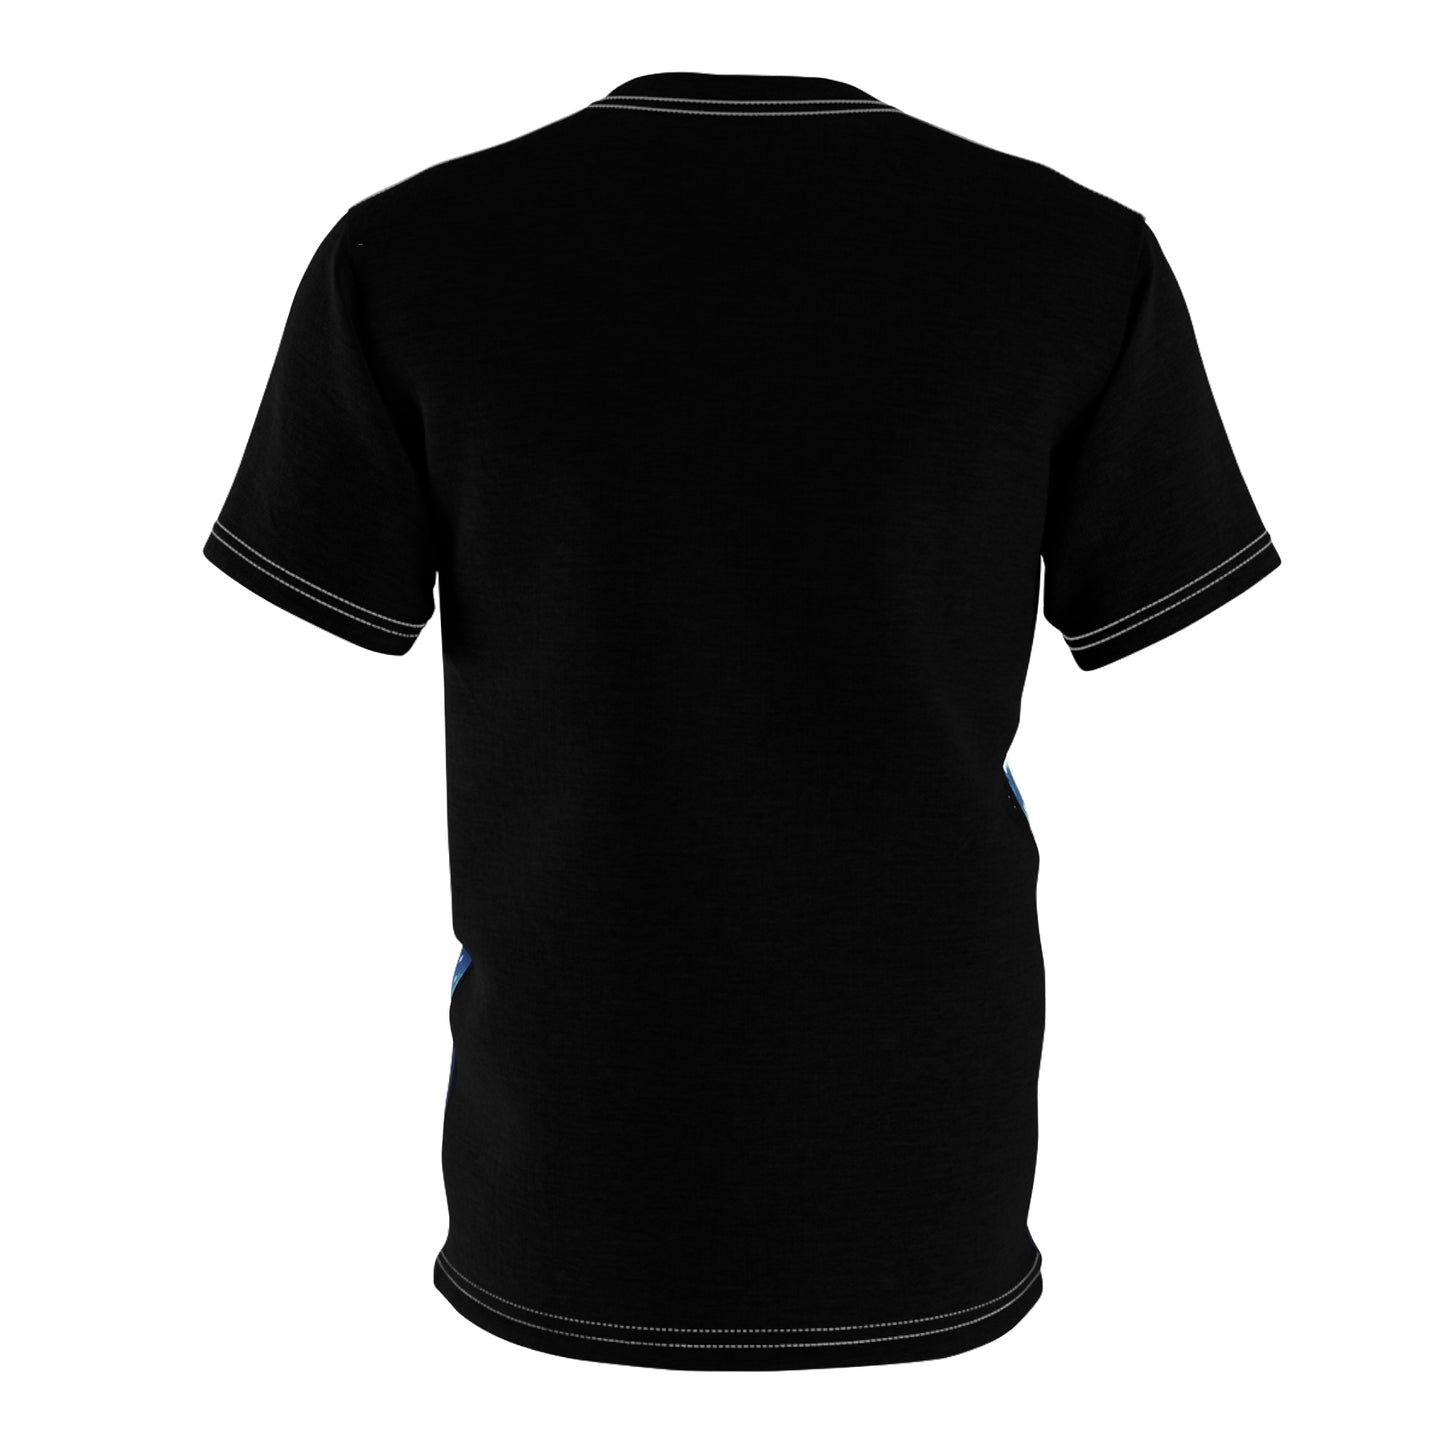 Skeleton Company - Unisex All-Over Print Cut & Sew T-Shirt